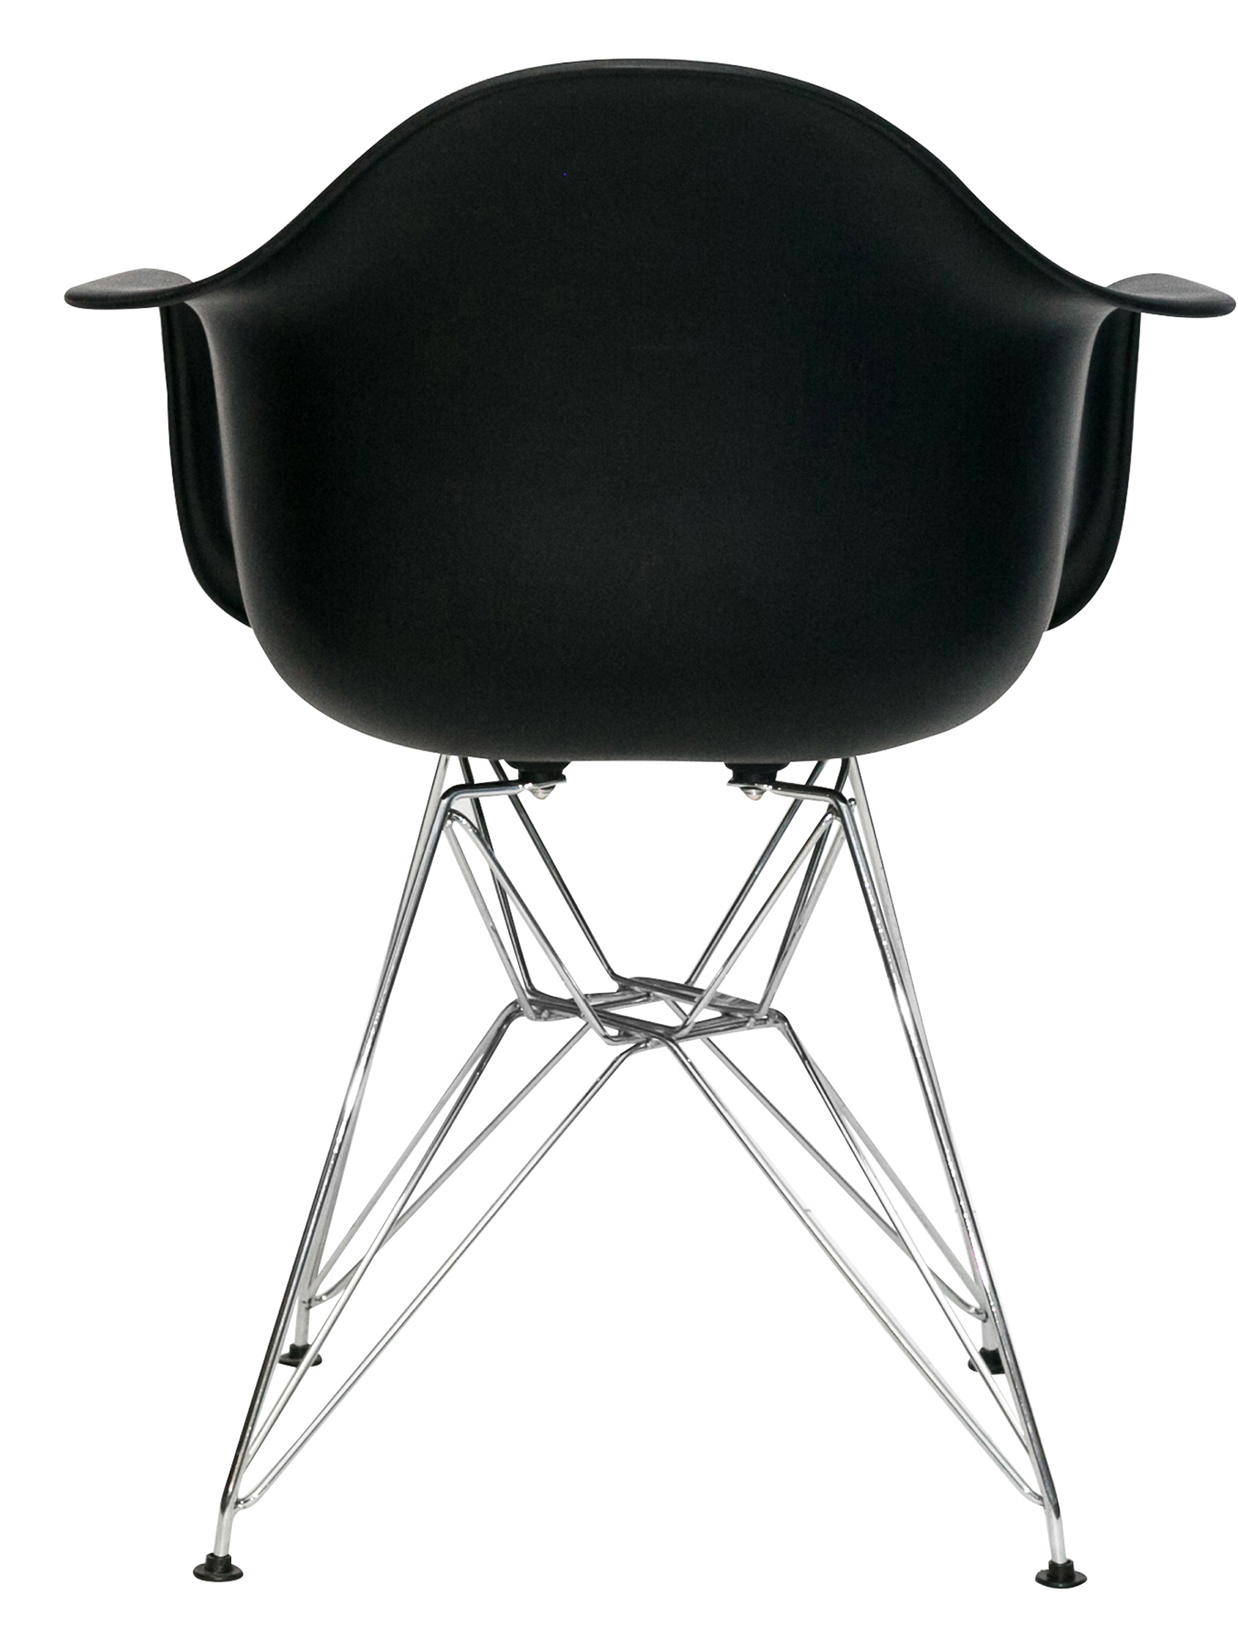 Дизайнерское кресло Stool Group Имс Дар